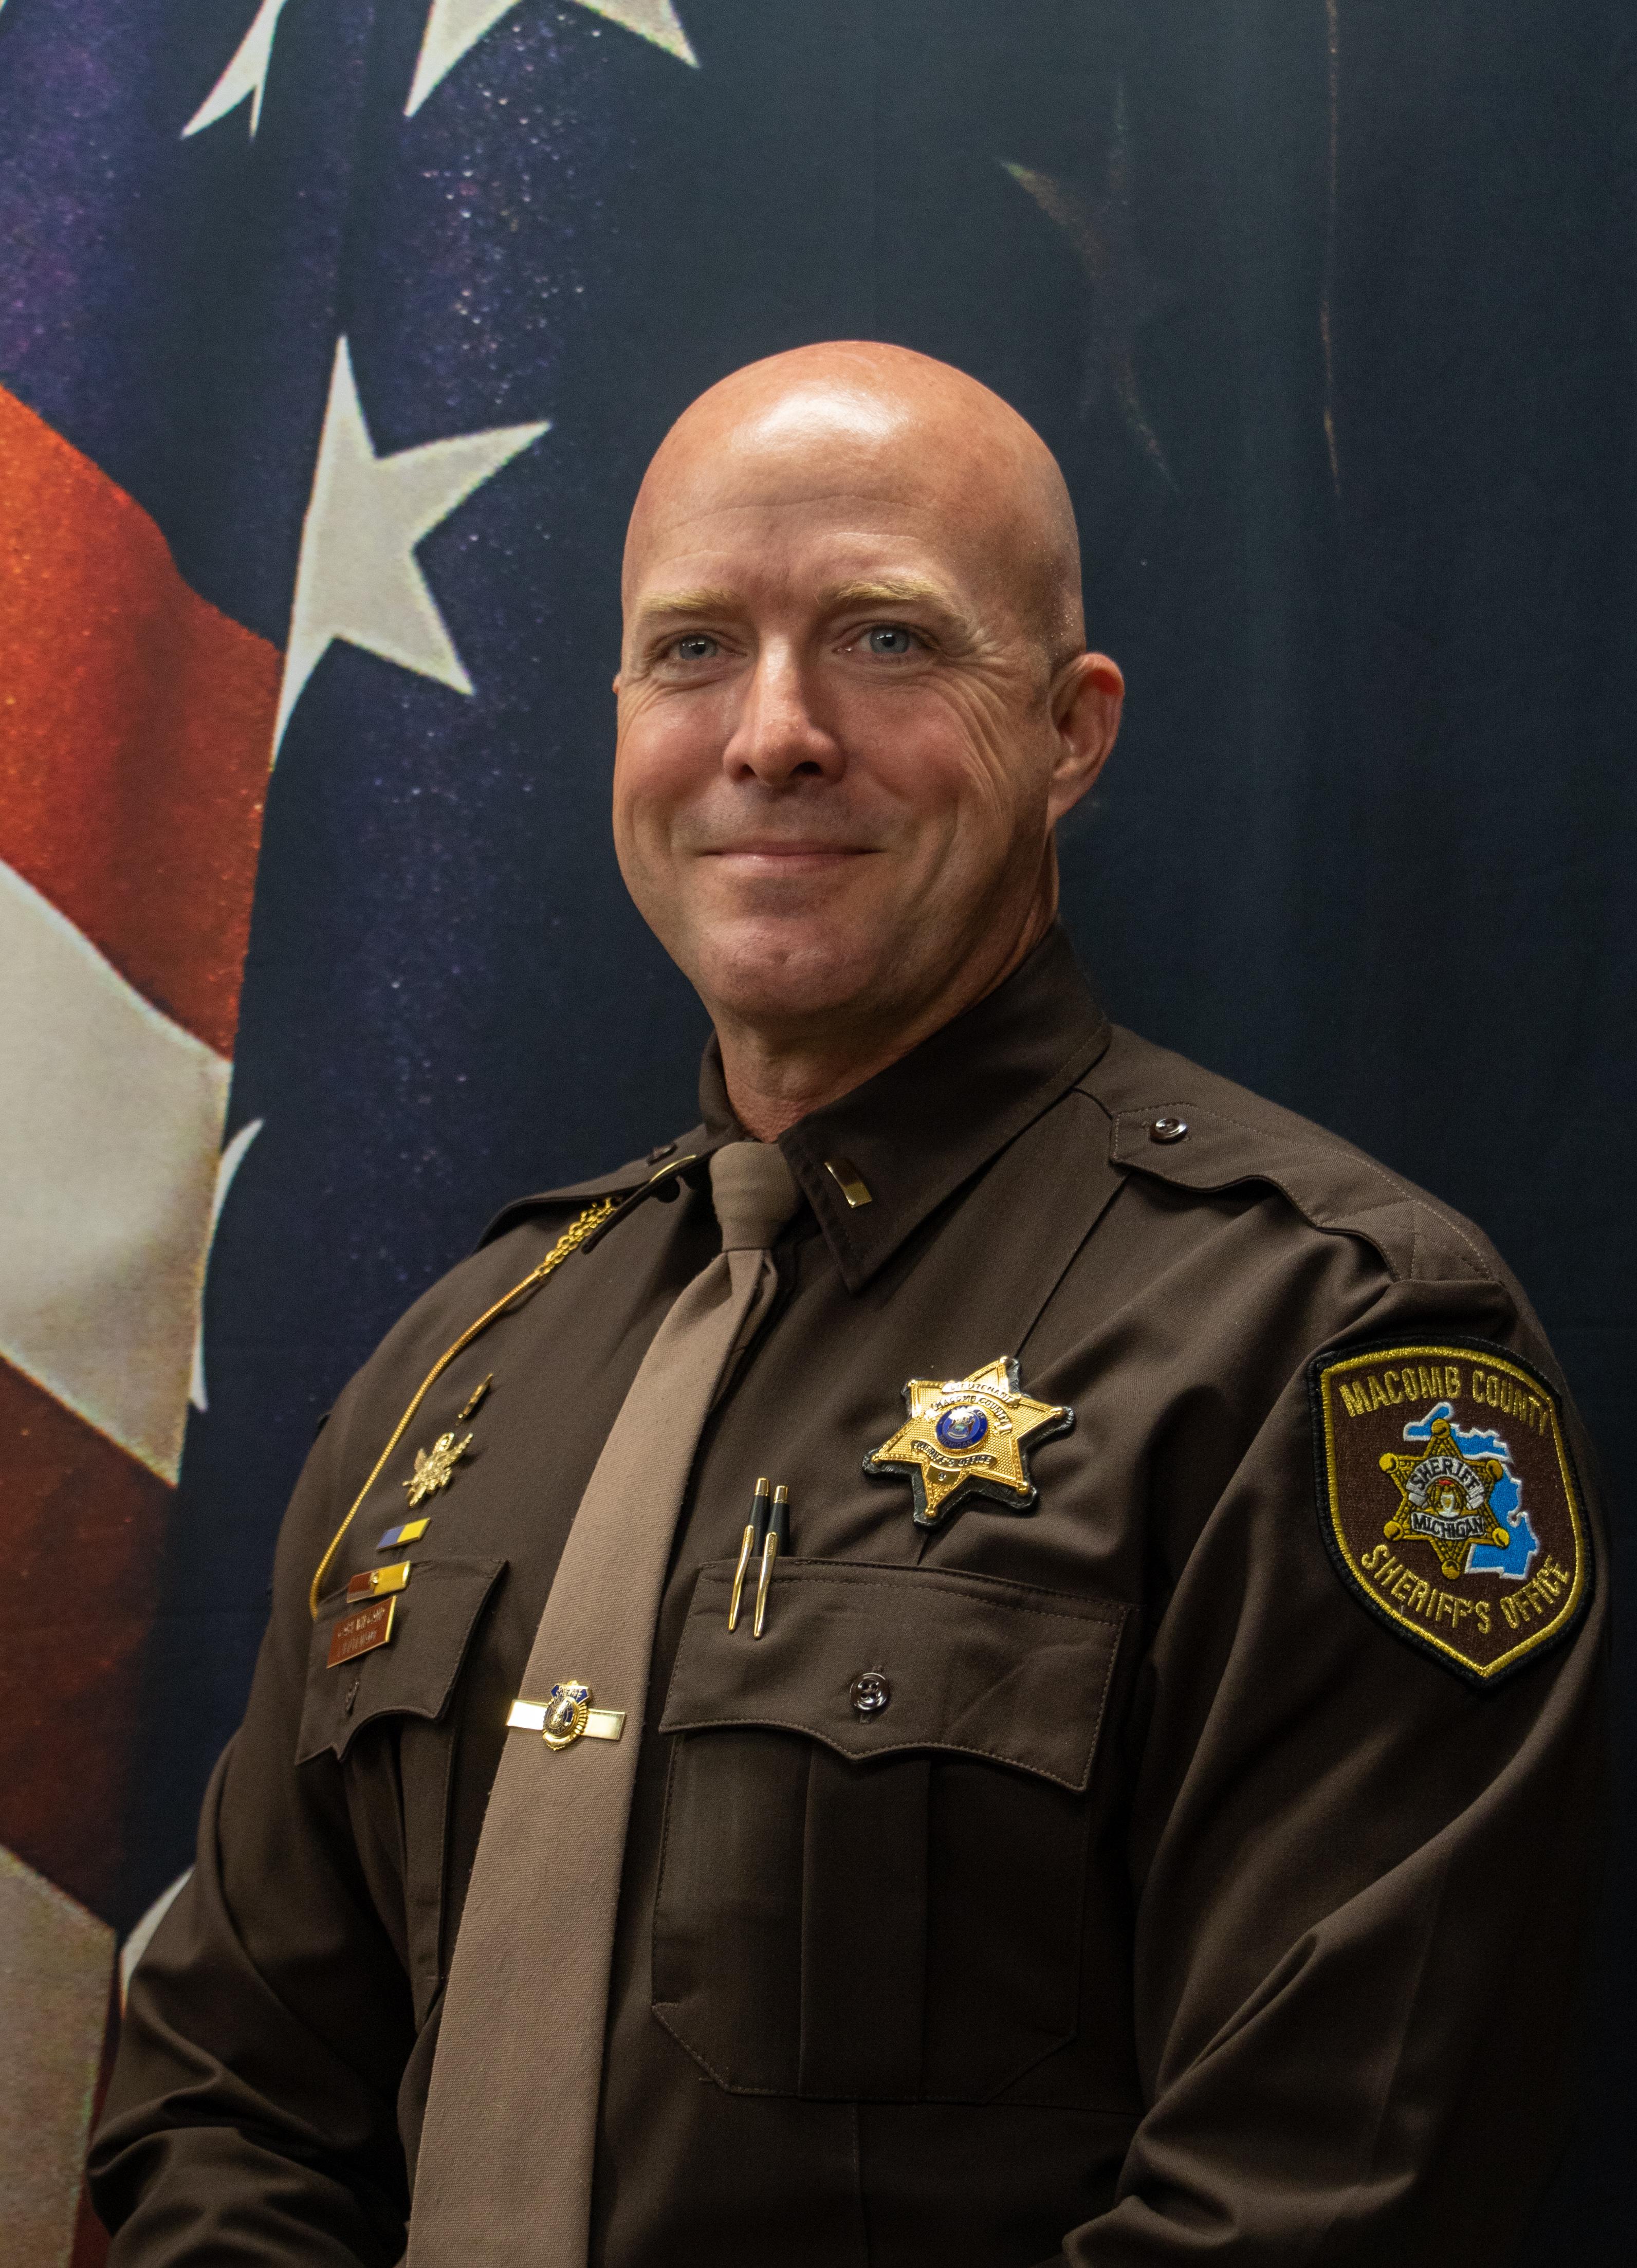 Sheriff - Lieutenant Wiegand